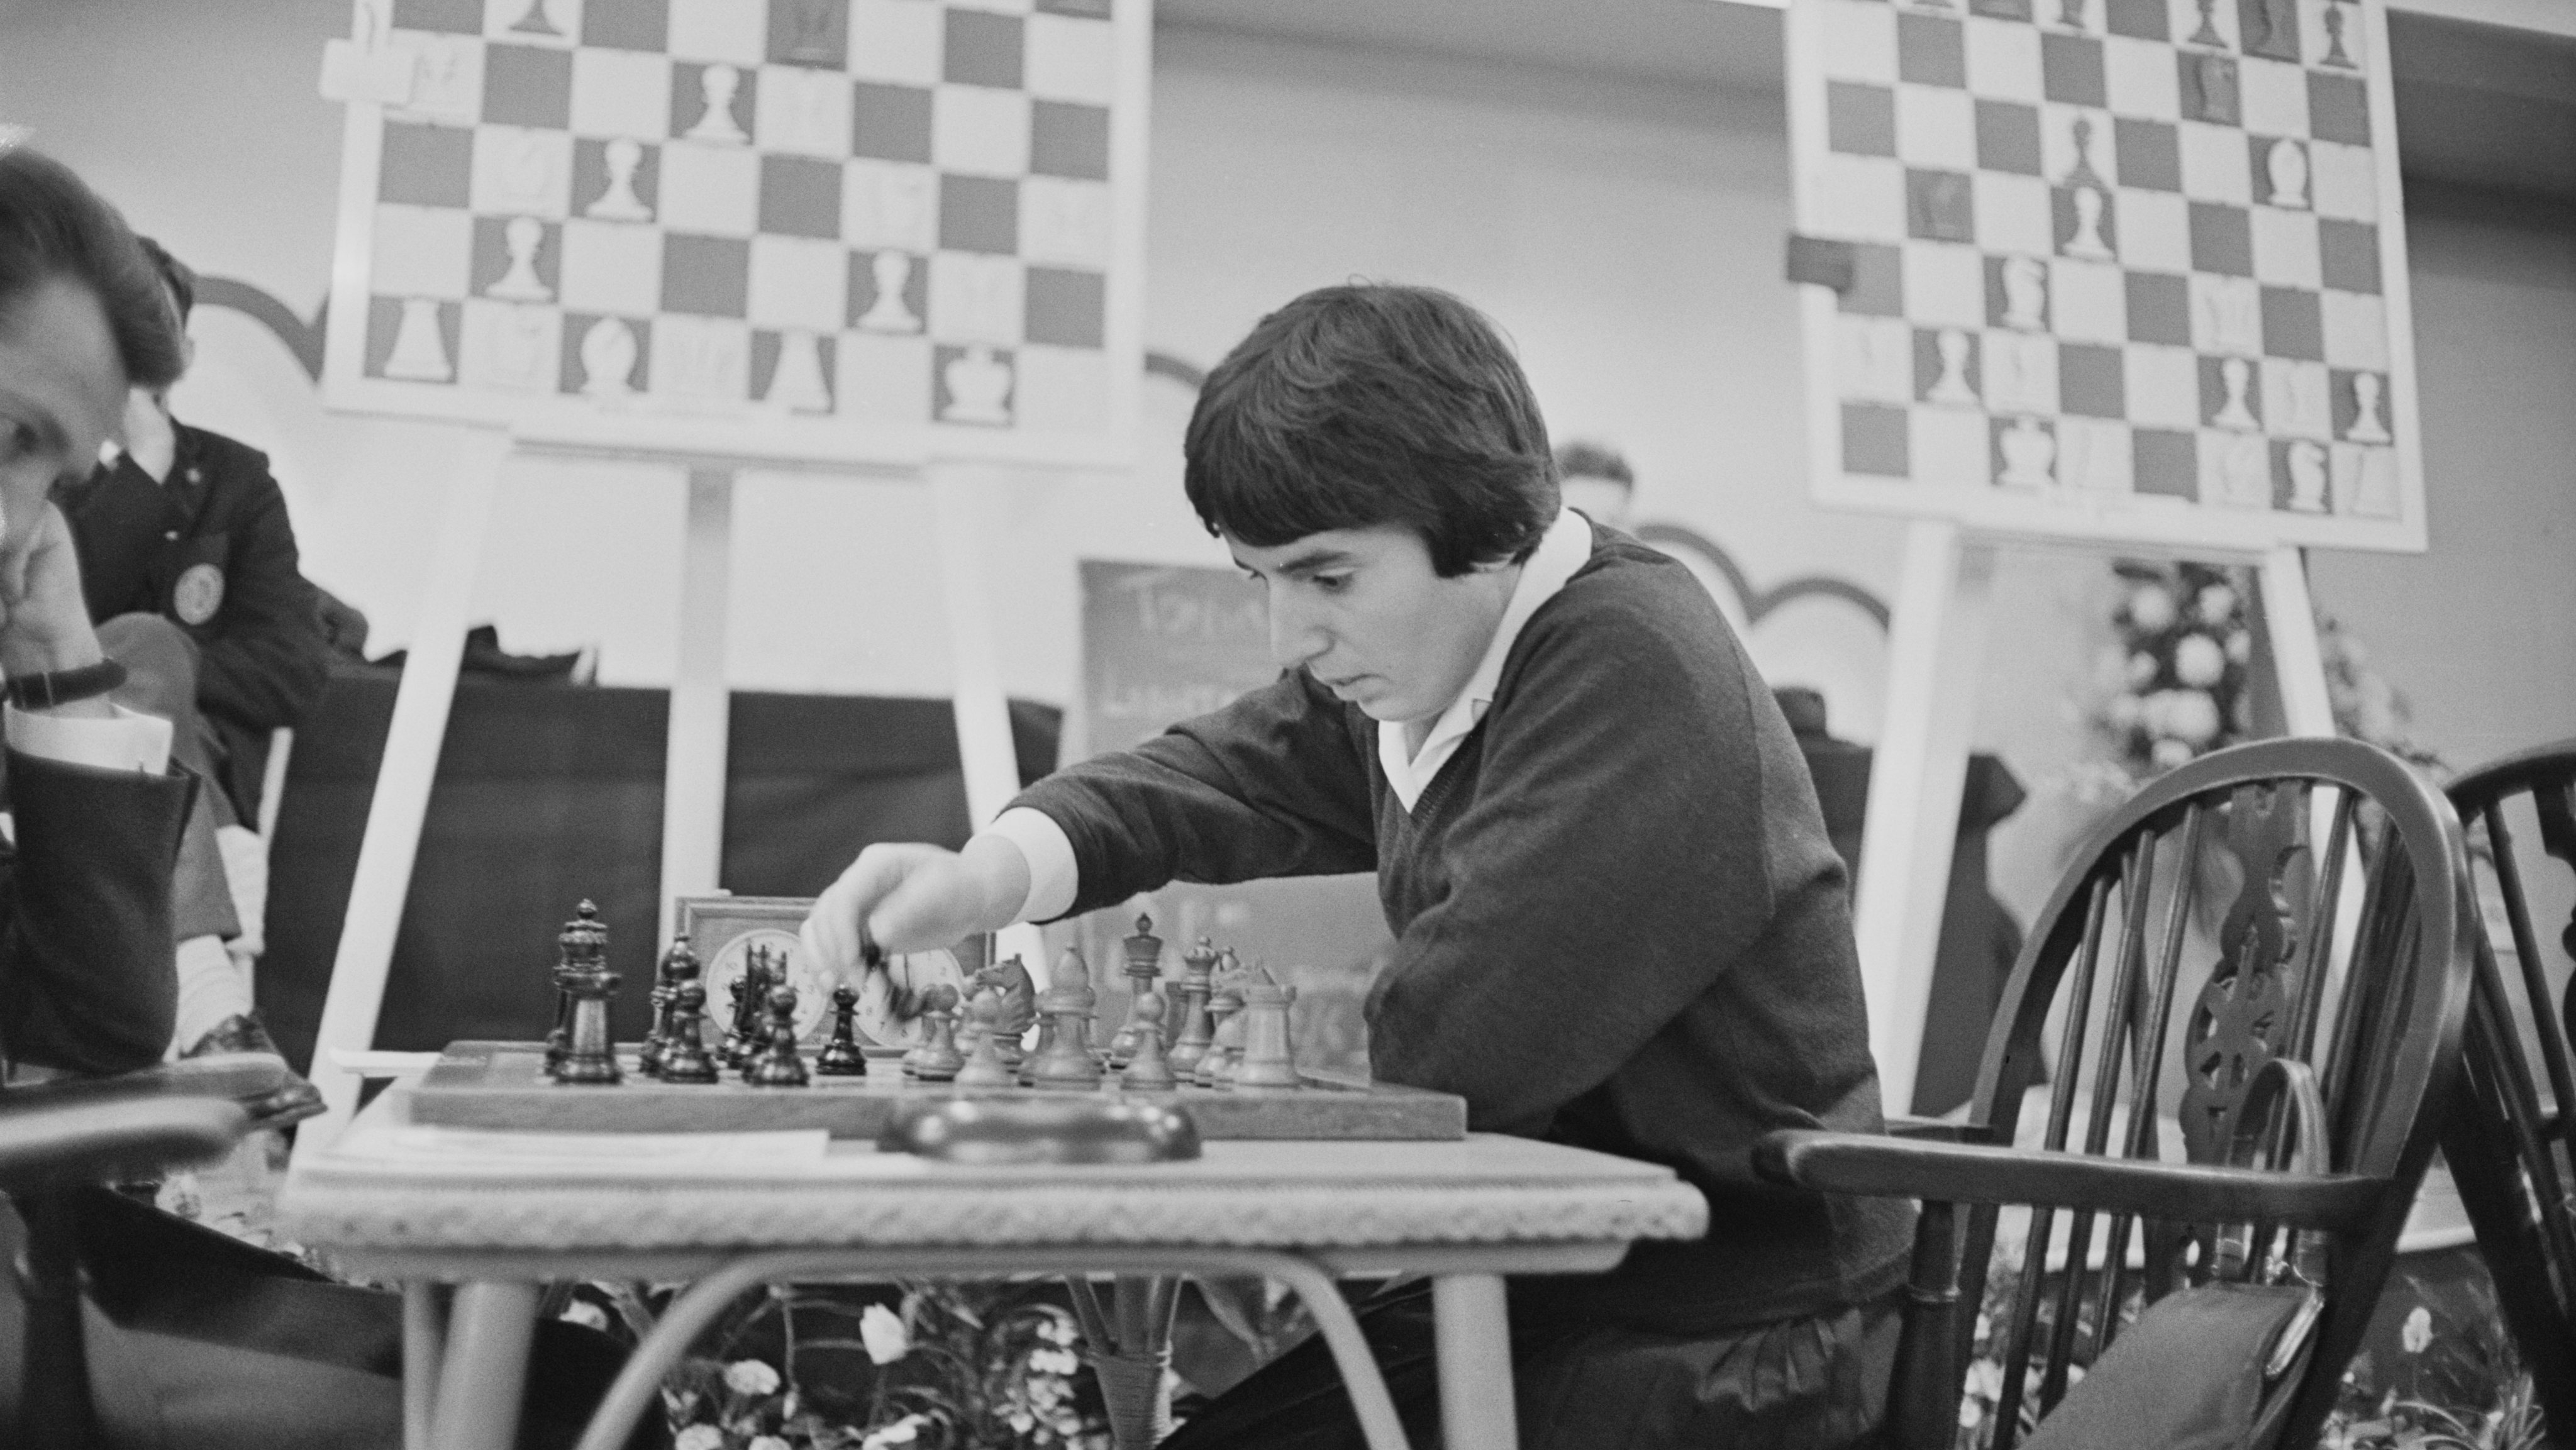 Norueguês conquista 3º título mundial de xadrez – DW – 01/12/2016